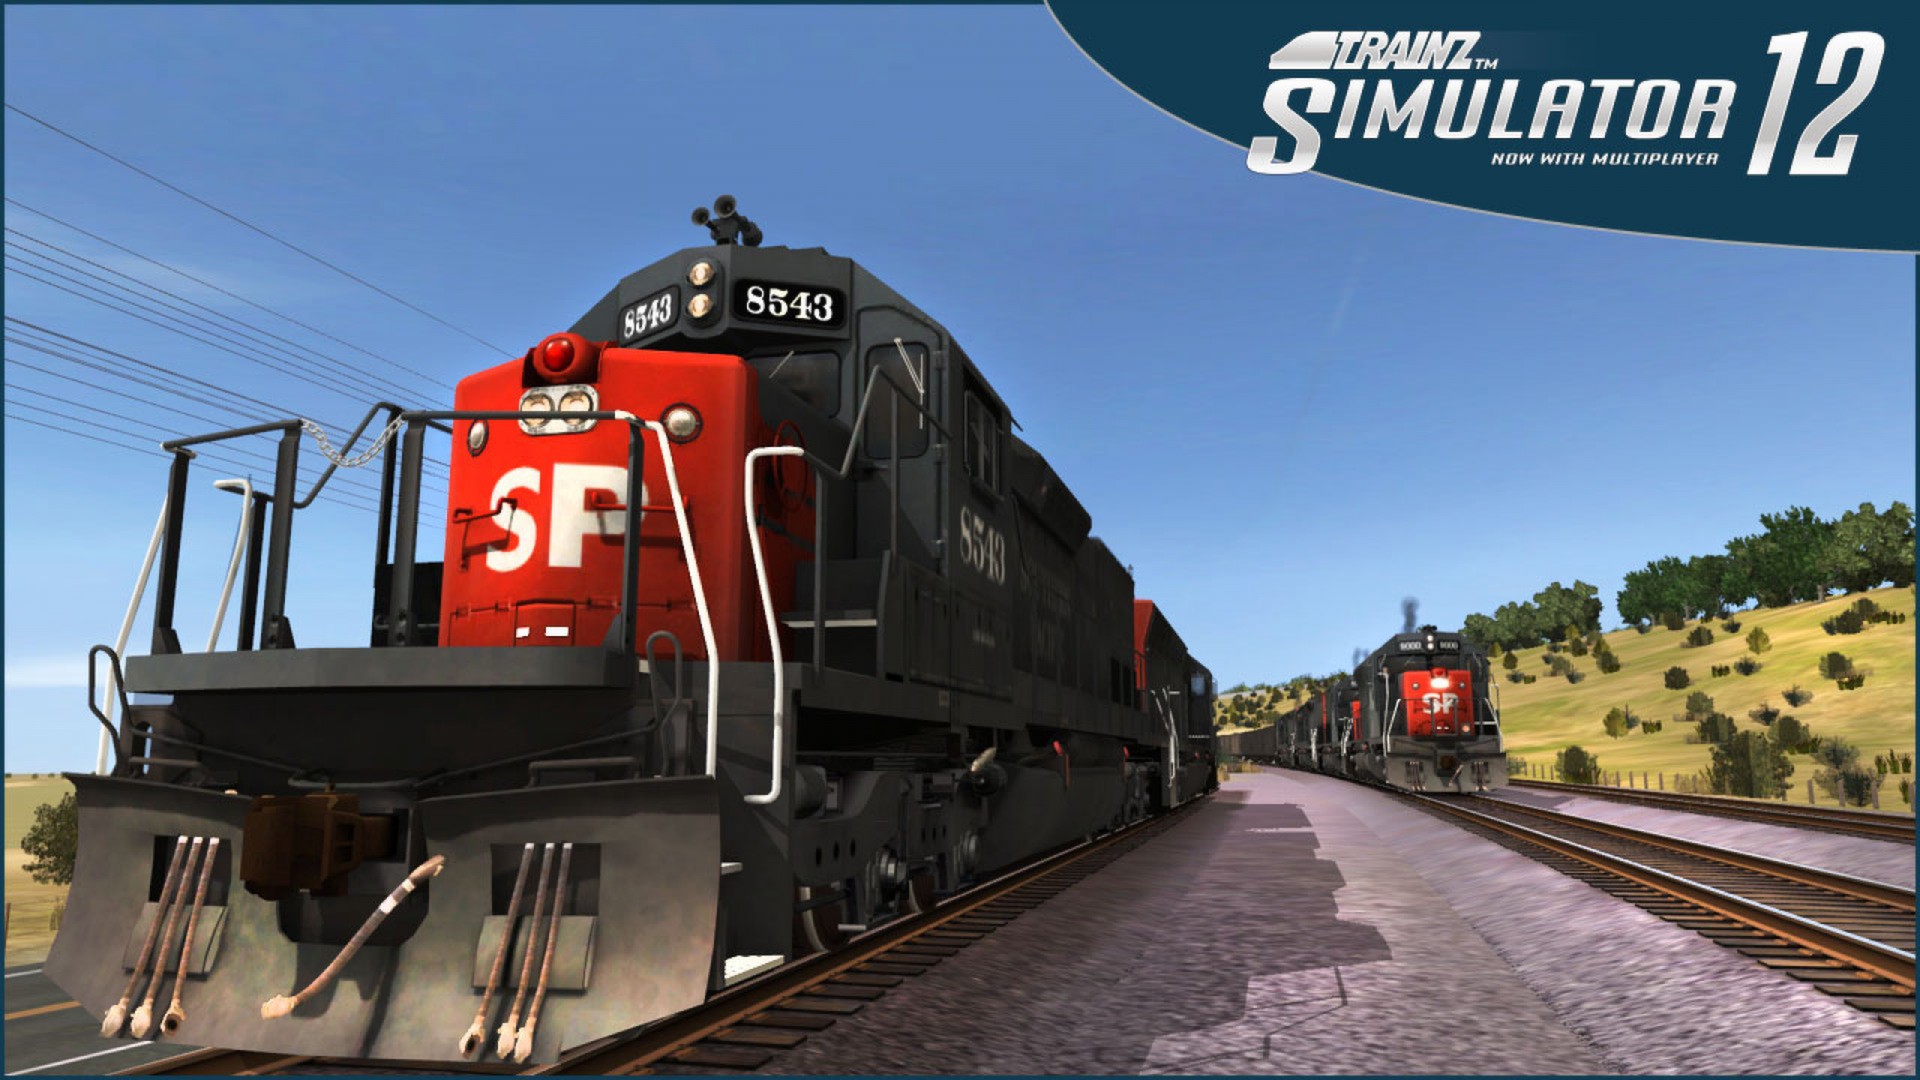 Steam train simulator free download windows 7